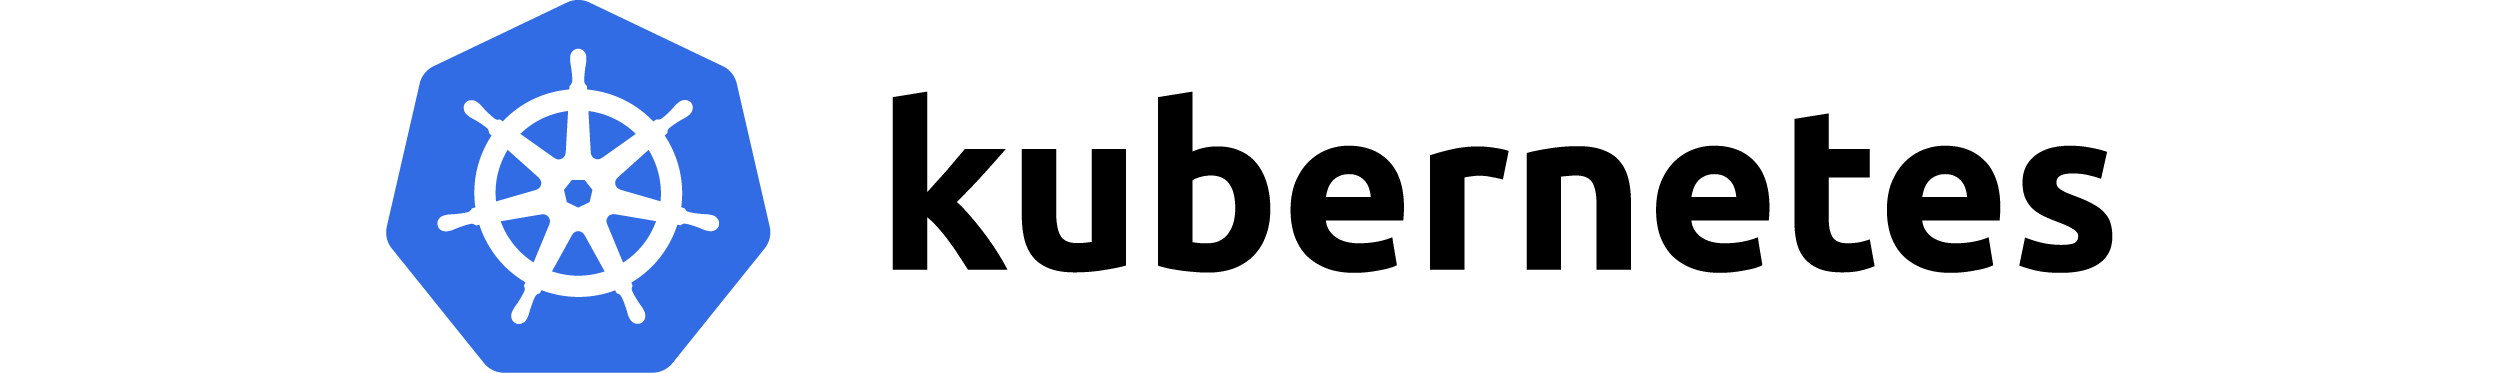 Svg Kubernetes Logo, Hd Png D